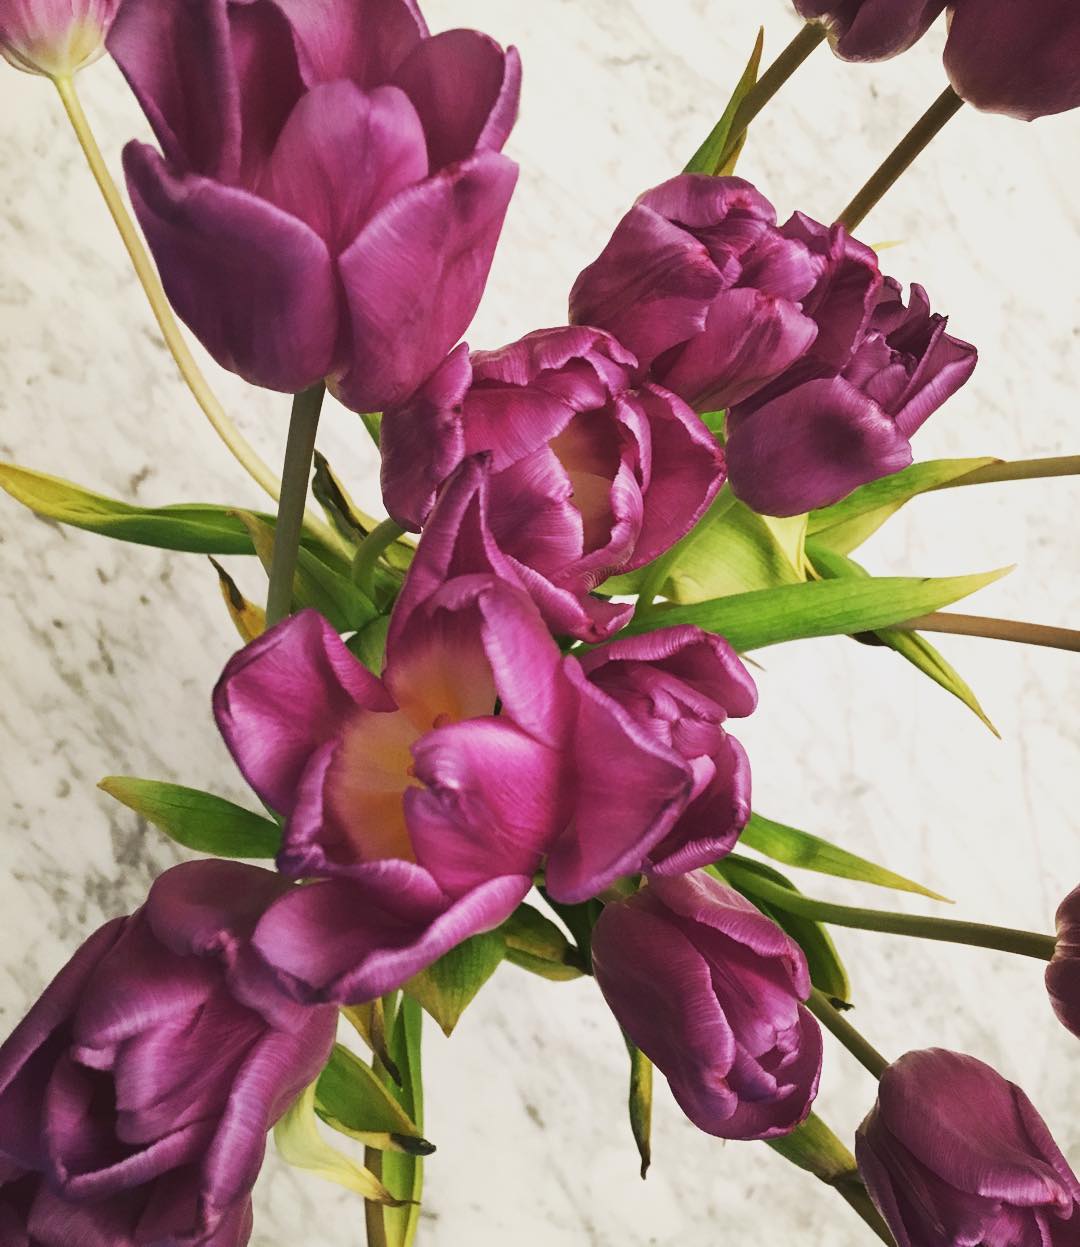 #Sundaynight #prettyflowers #tulips last so long and help the winter go #byeeee